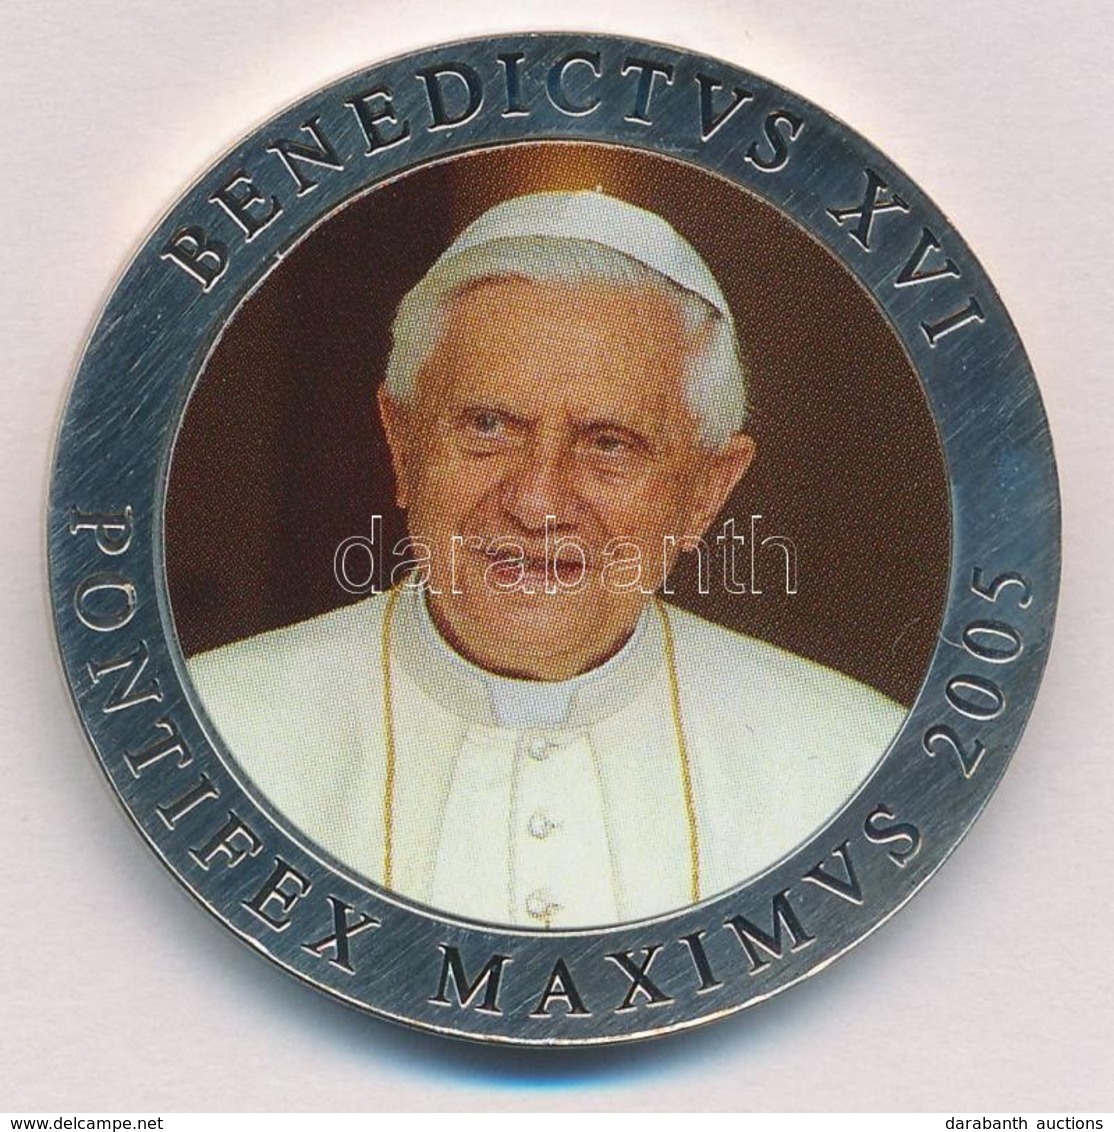 Vatikán 2005. 'XVI. Benedek Pápa' Ezüstözött Multicolor Emlékérem (40mm) T:PP 
Vatican 2005. 'Pope Benedictvs XVI' Silve - Unclassified